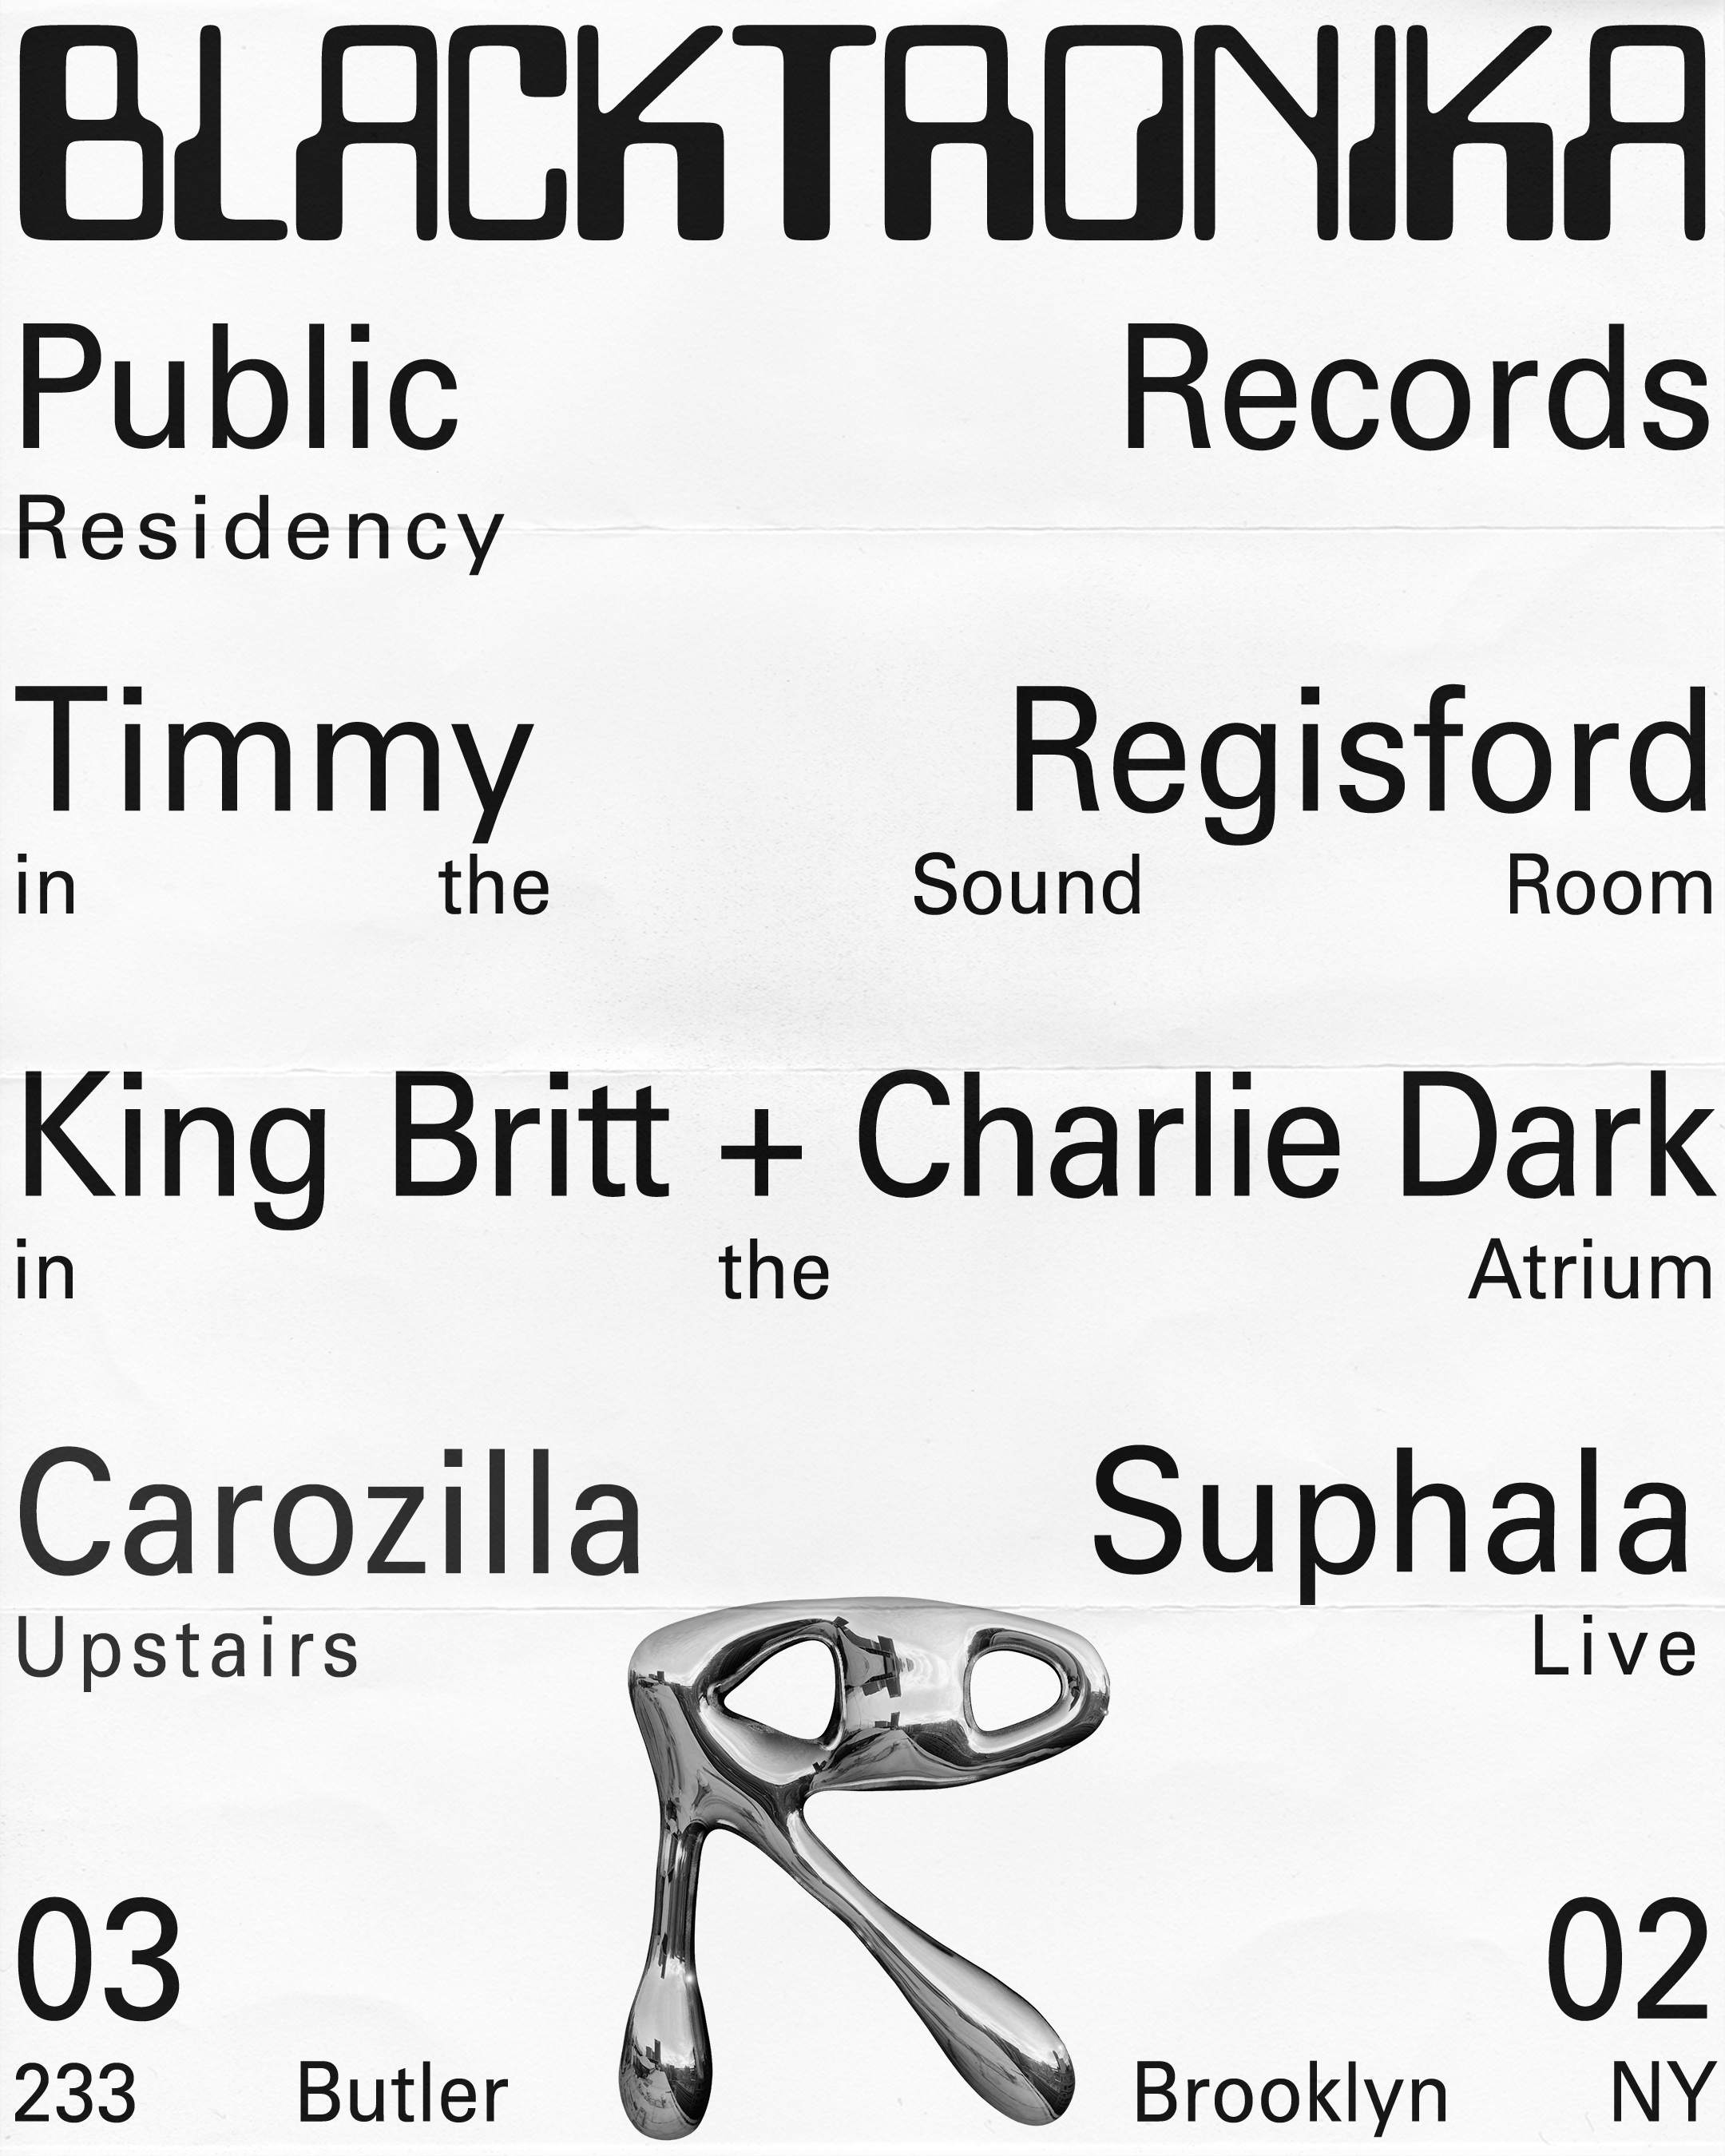 Blacktronika: Timmy Regisford / King Britt + Charlie Dark / Carozilla / Suphala - フライヤー表